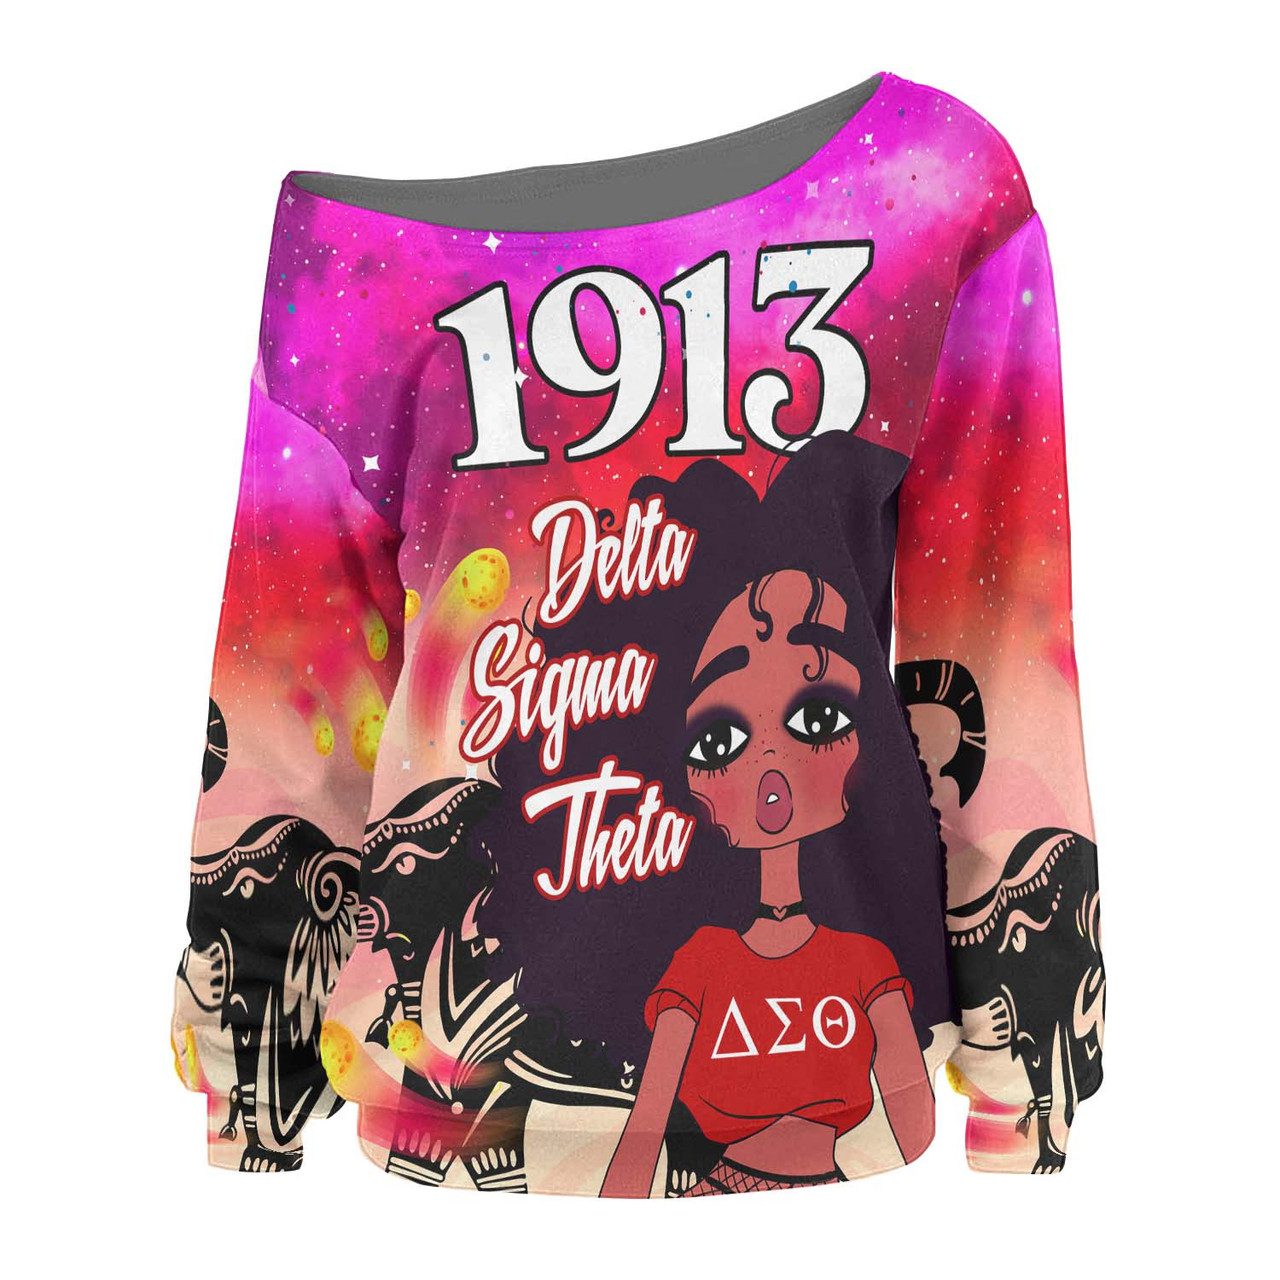 Delta Sigma Theta Women Off Shoulder Sweater – Custom Sorority Delta Sigma Theta Girl Galaxy Dreaming Style 1913 Women Off Shoulder Sweater